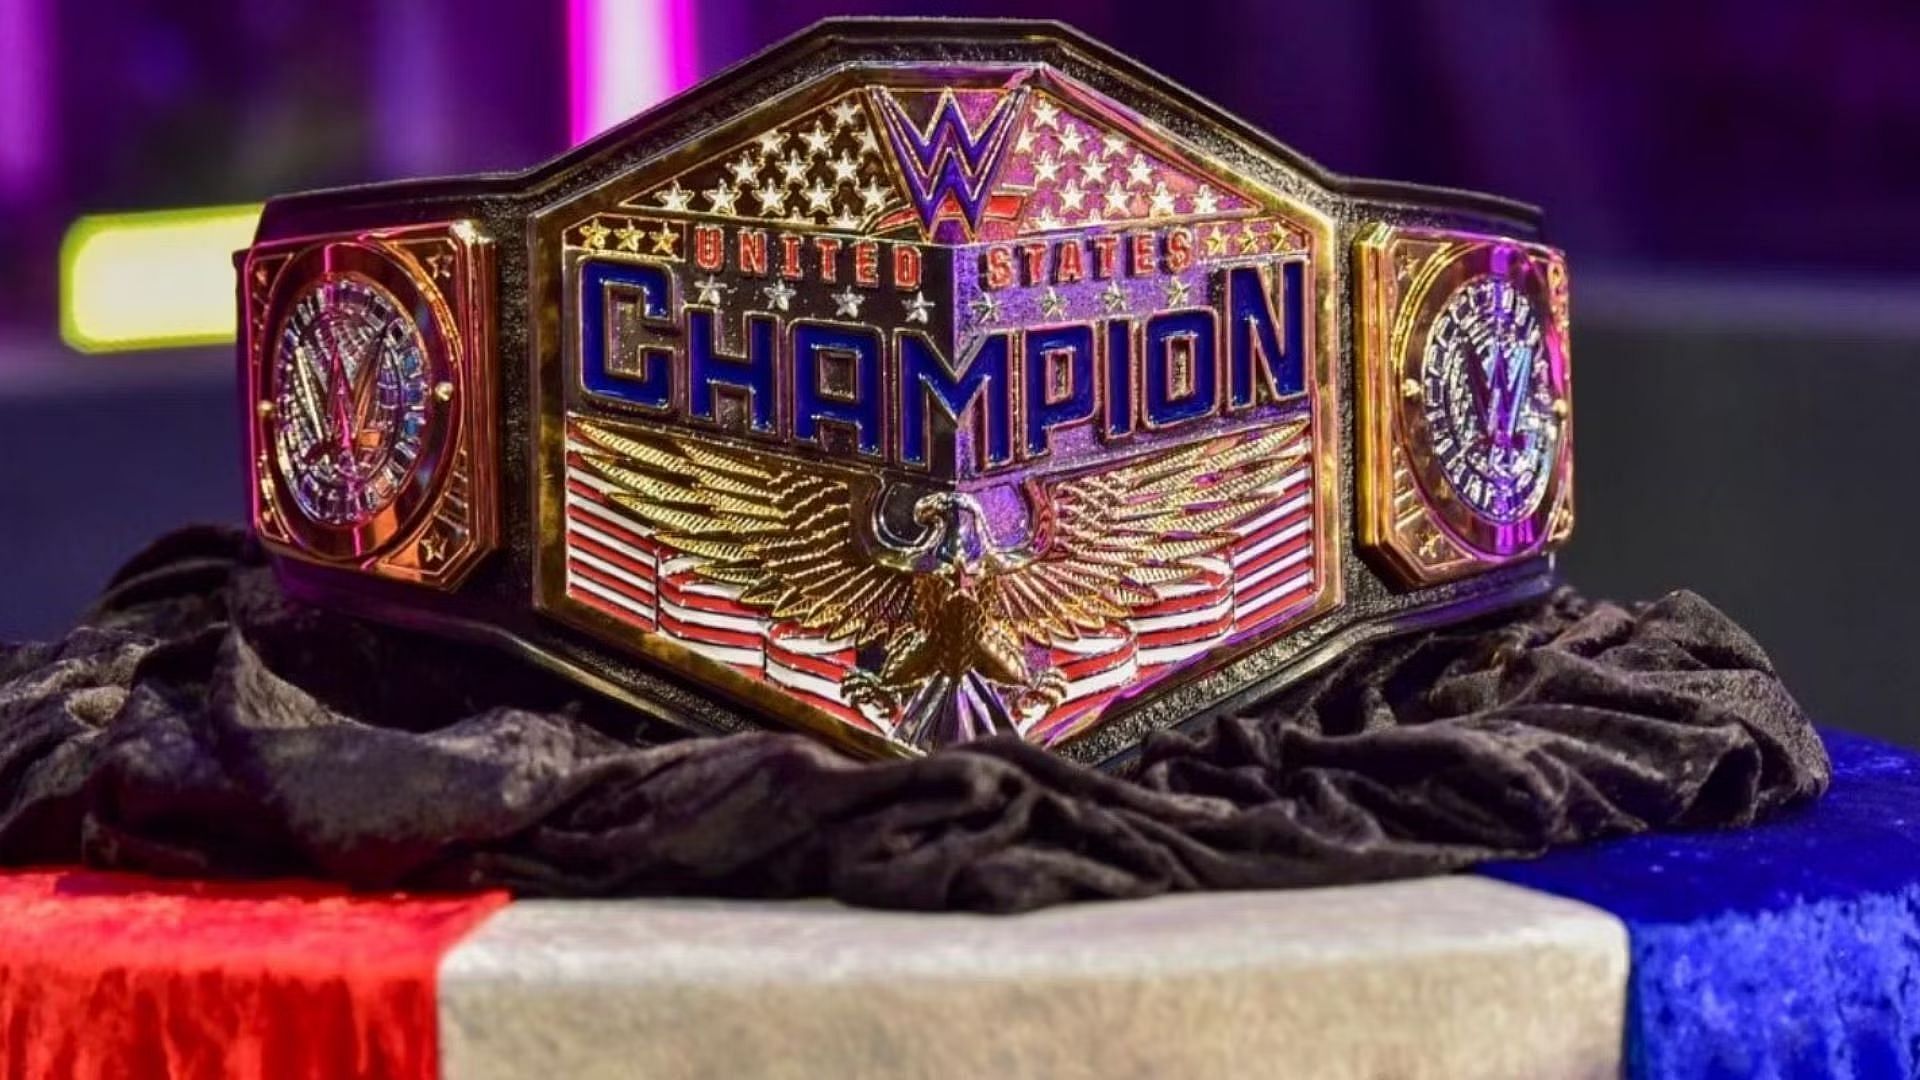 The WWE United States Championship belt